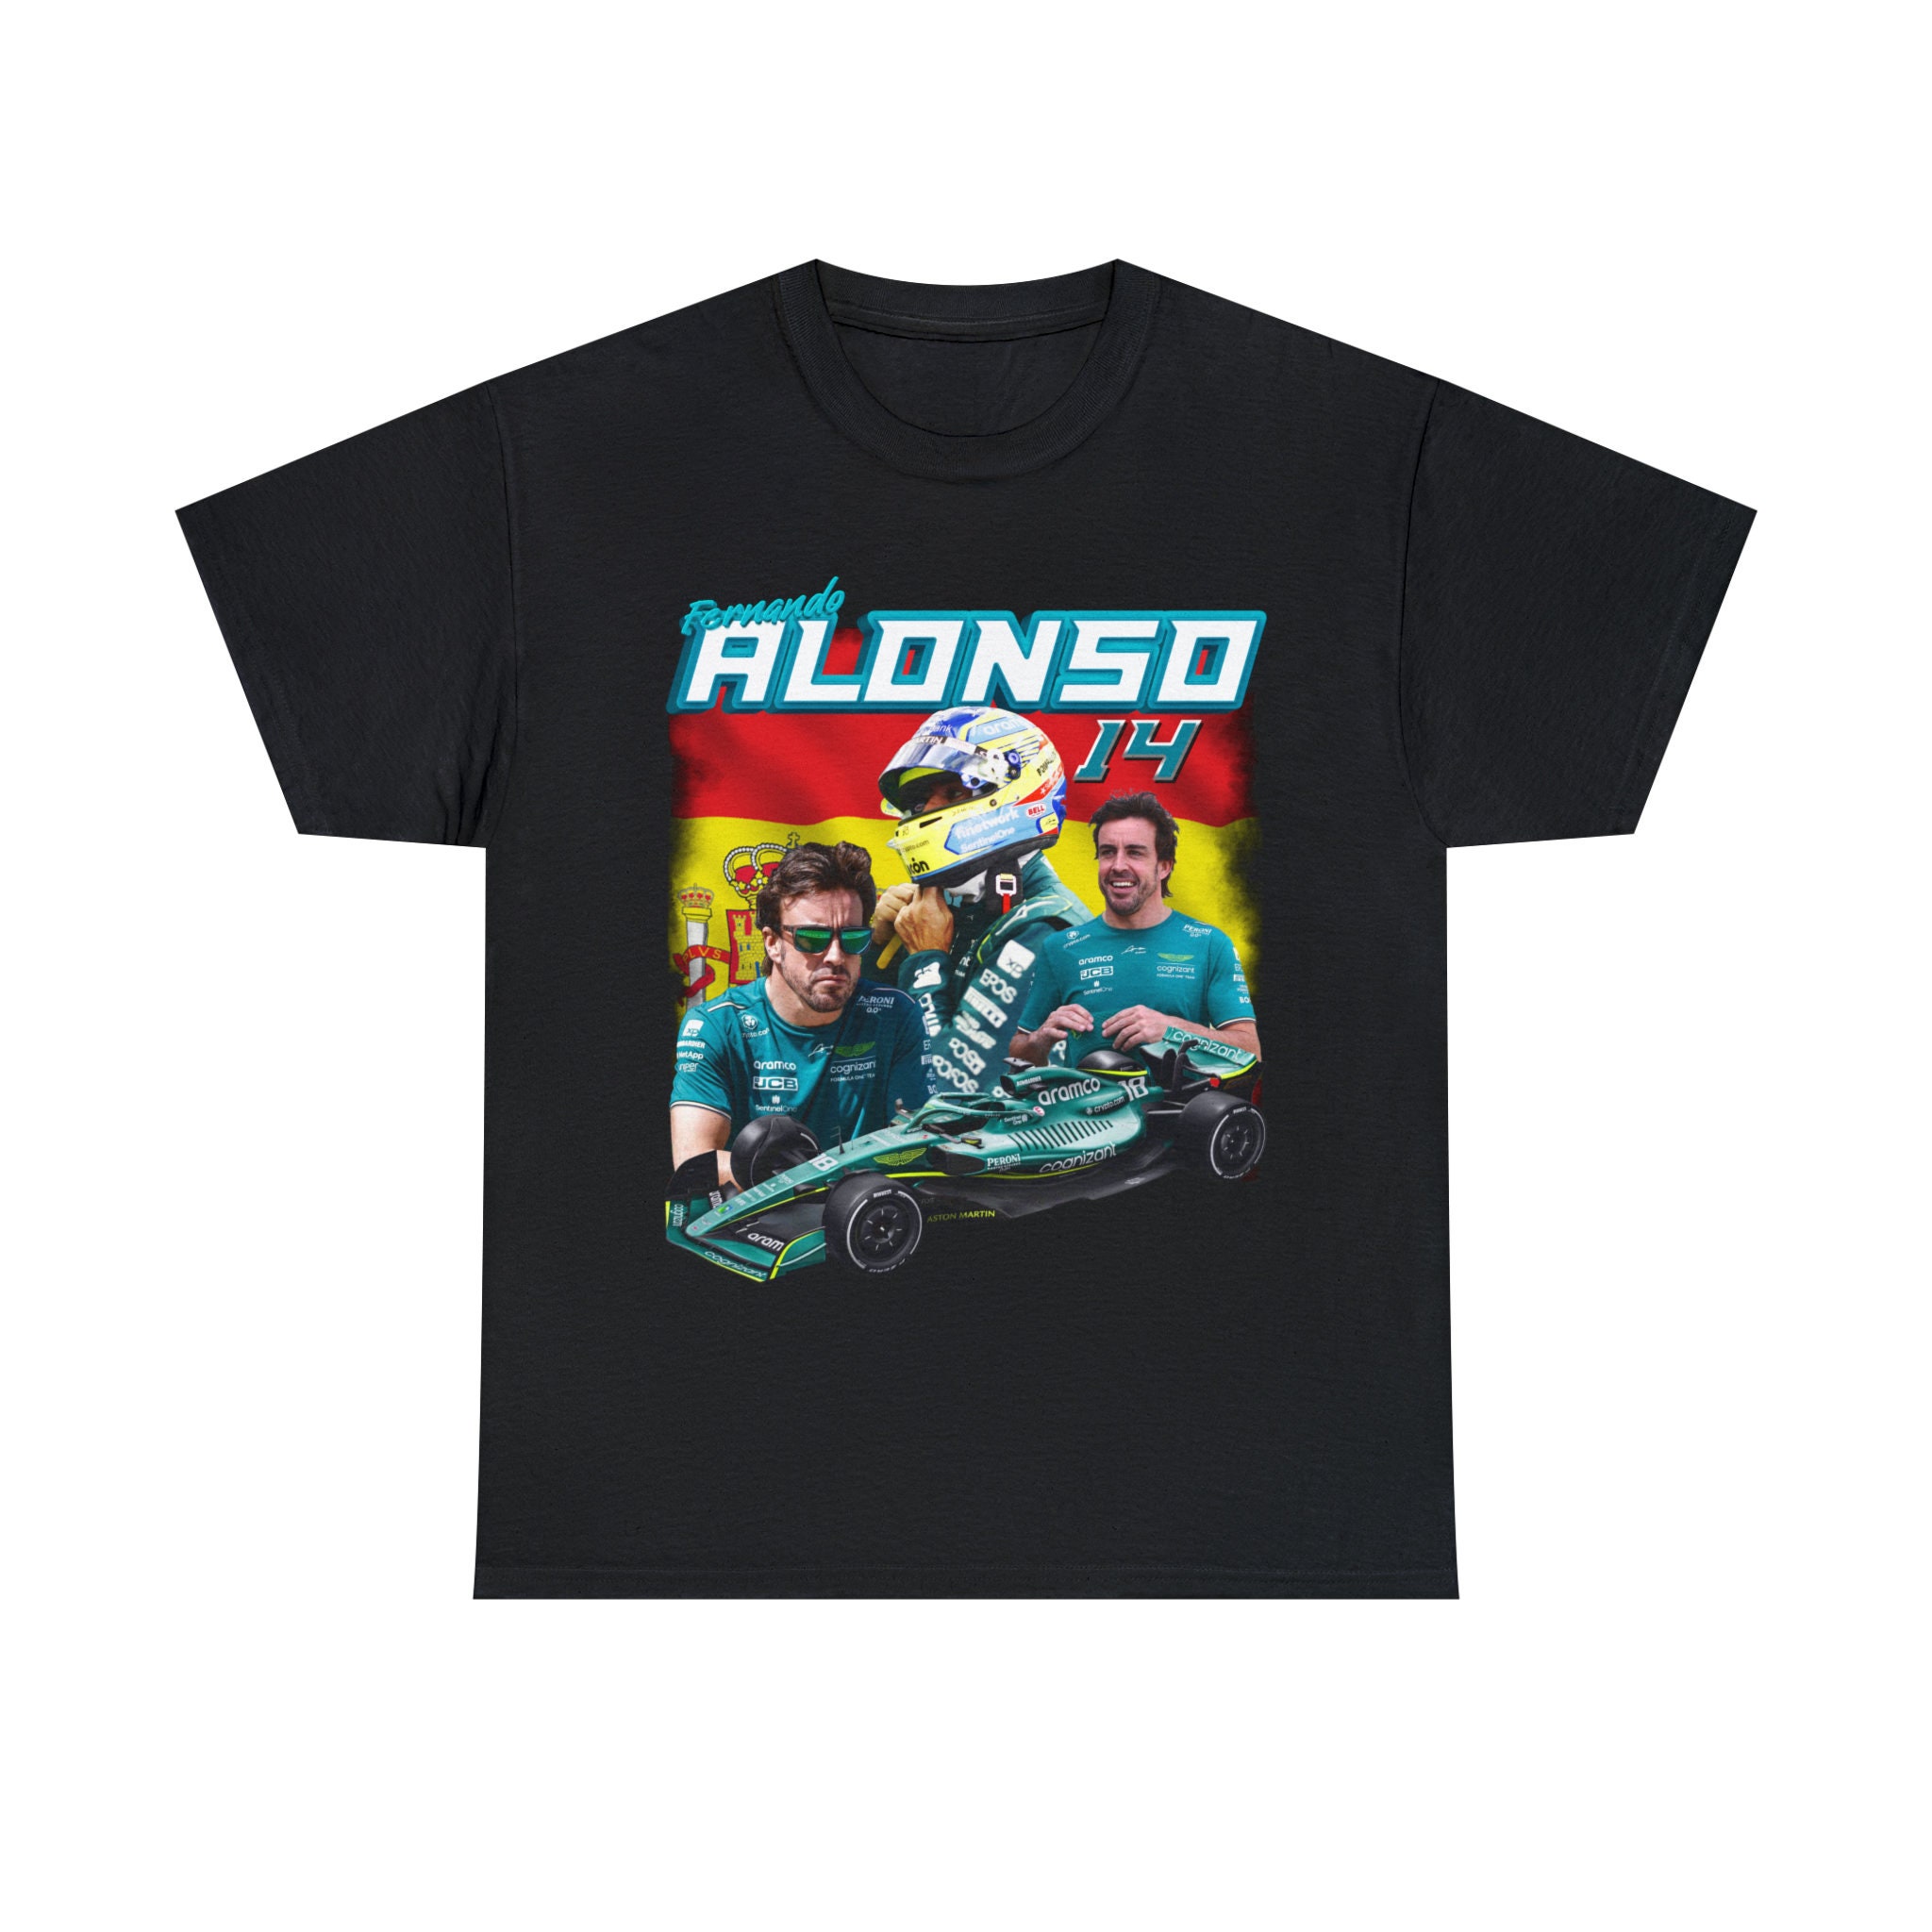 Camiseta unisex Fernando Alonso Aston Martin Formula One Racing Vintage 90s  Bootleg, camiseta Racing Grand Prix F1 -  México